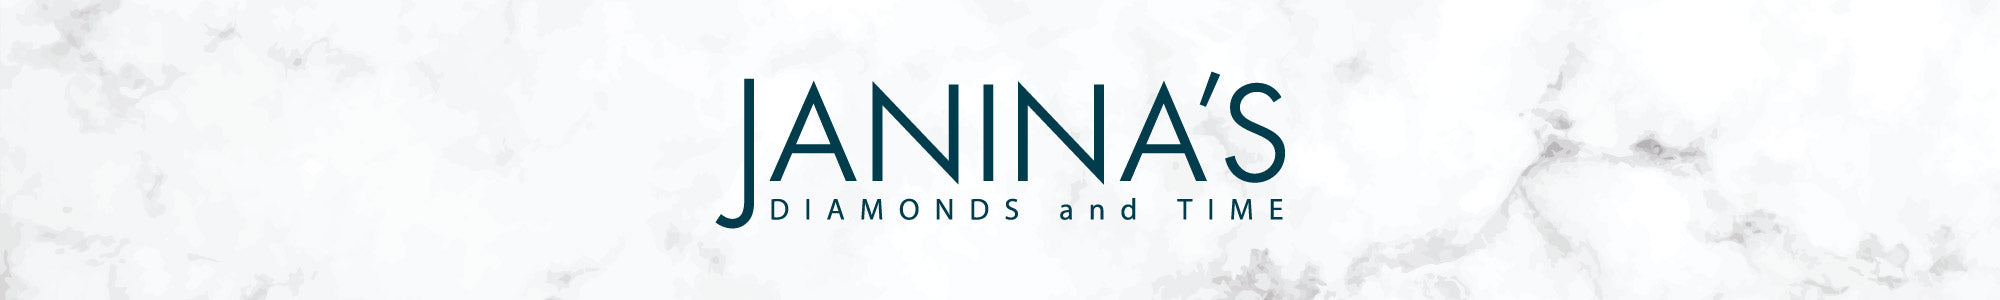 Janina's Products